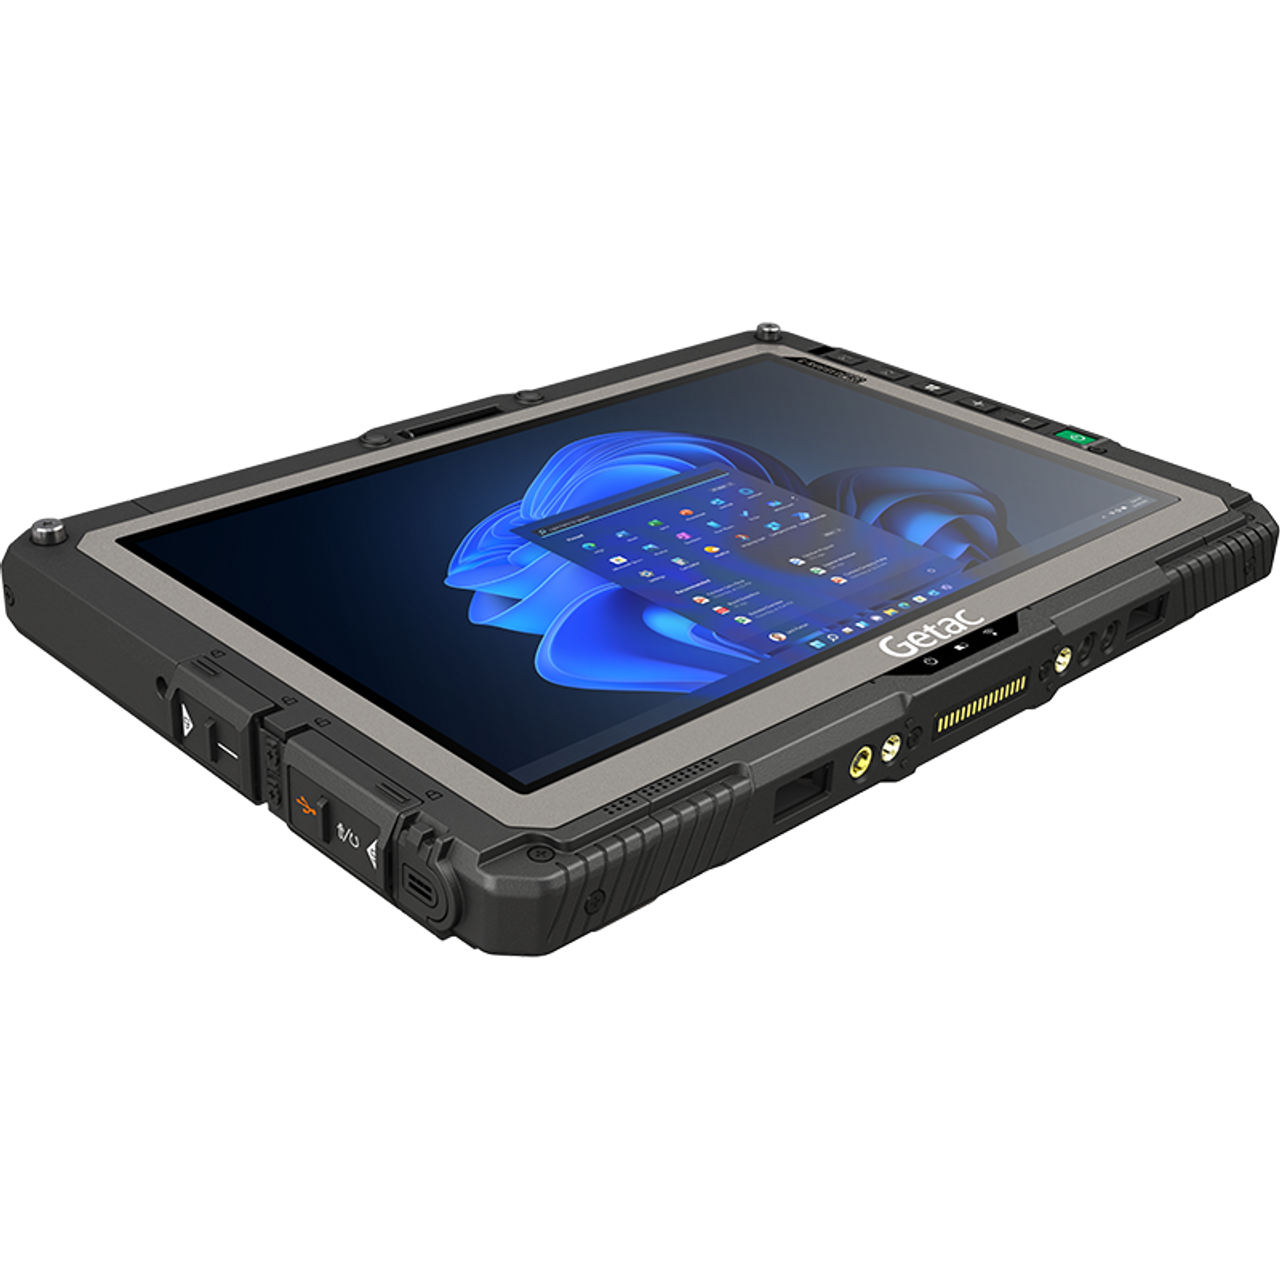 Getac UX10G2-R TAA i7-10510U, Without Webcam, W 10 Pro x64 with 16GB RAM + TAA, 256GB PCIe SSD, SR HD LCD + Touchscreen + Hard Tip stylus (w/o rear camera), US Power Cord, WIFI + BT, Smart Card Reader, yb2b